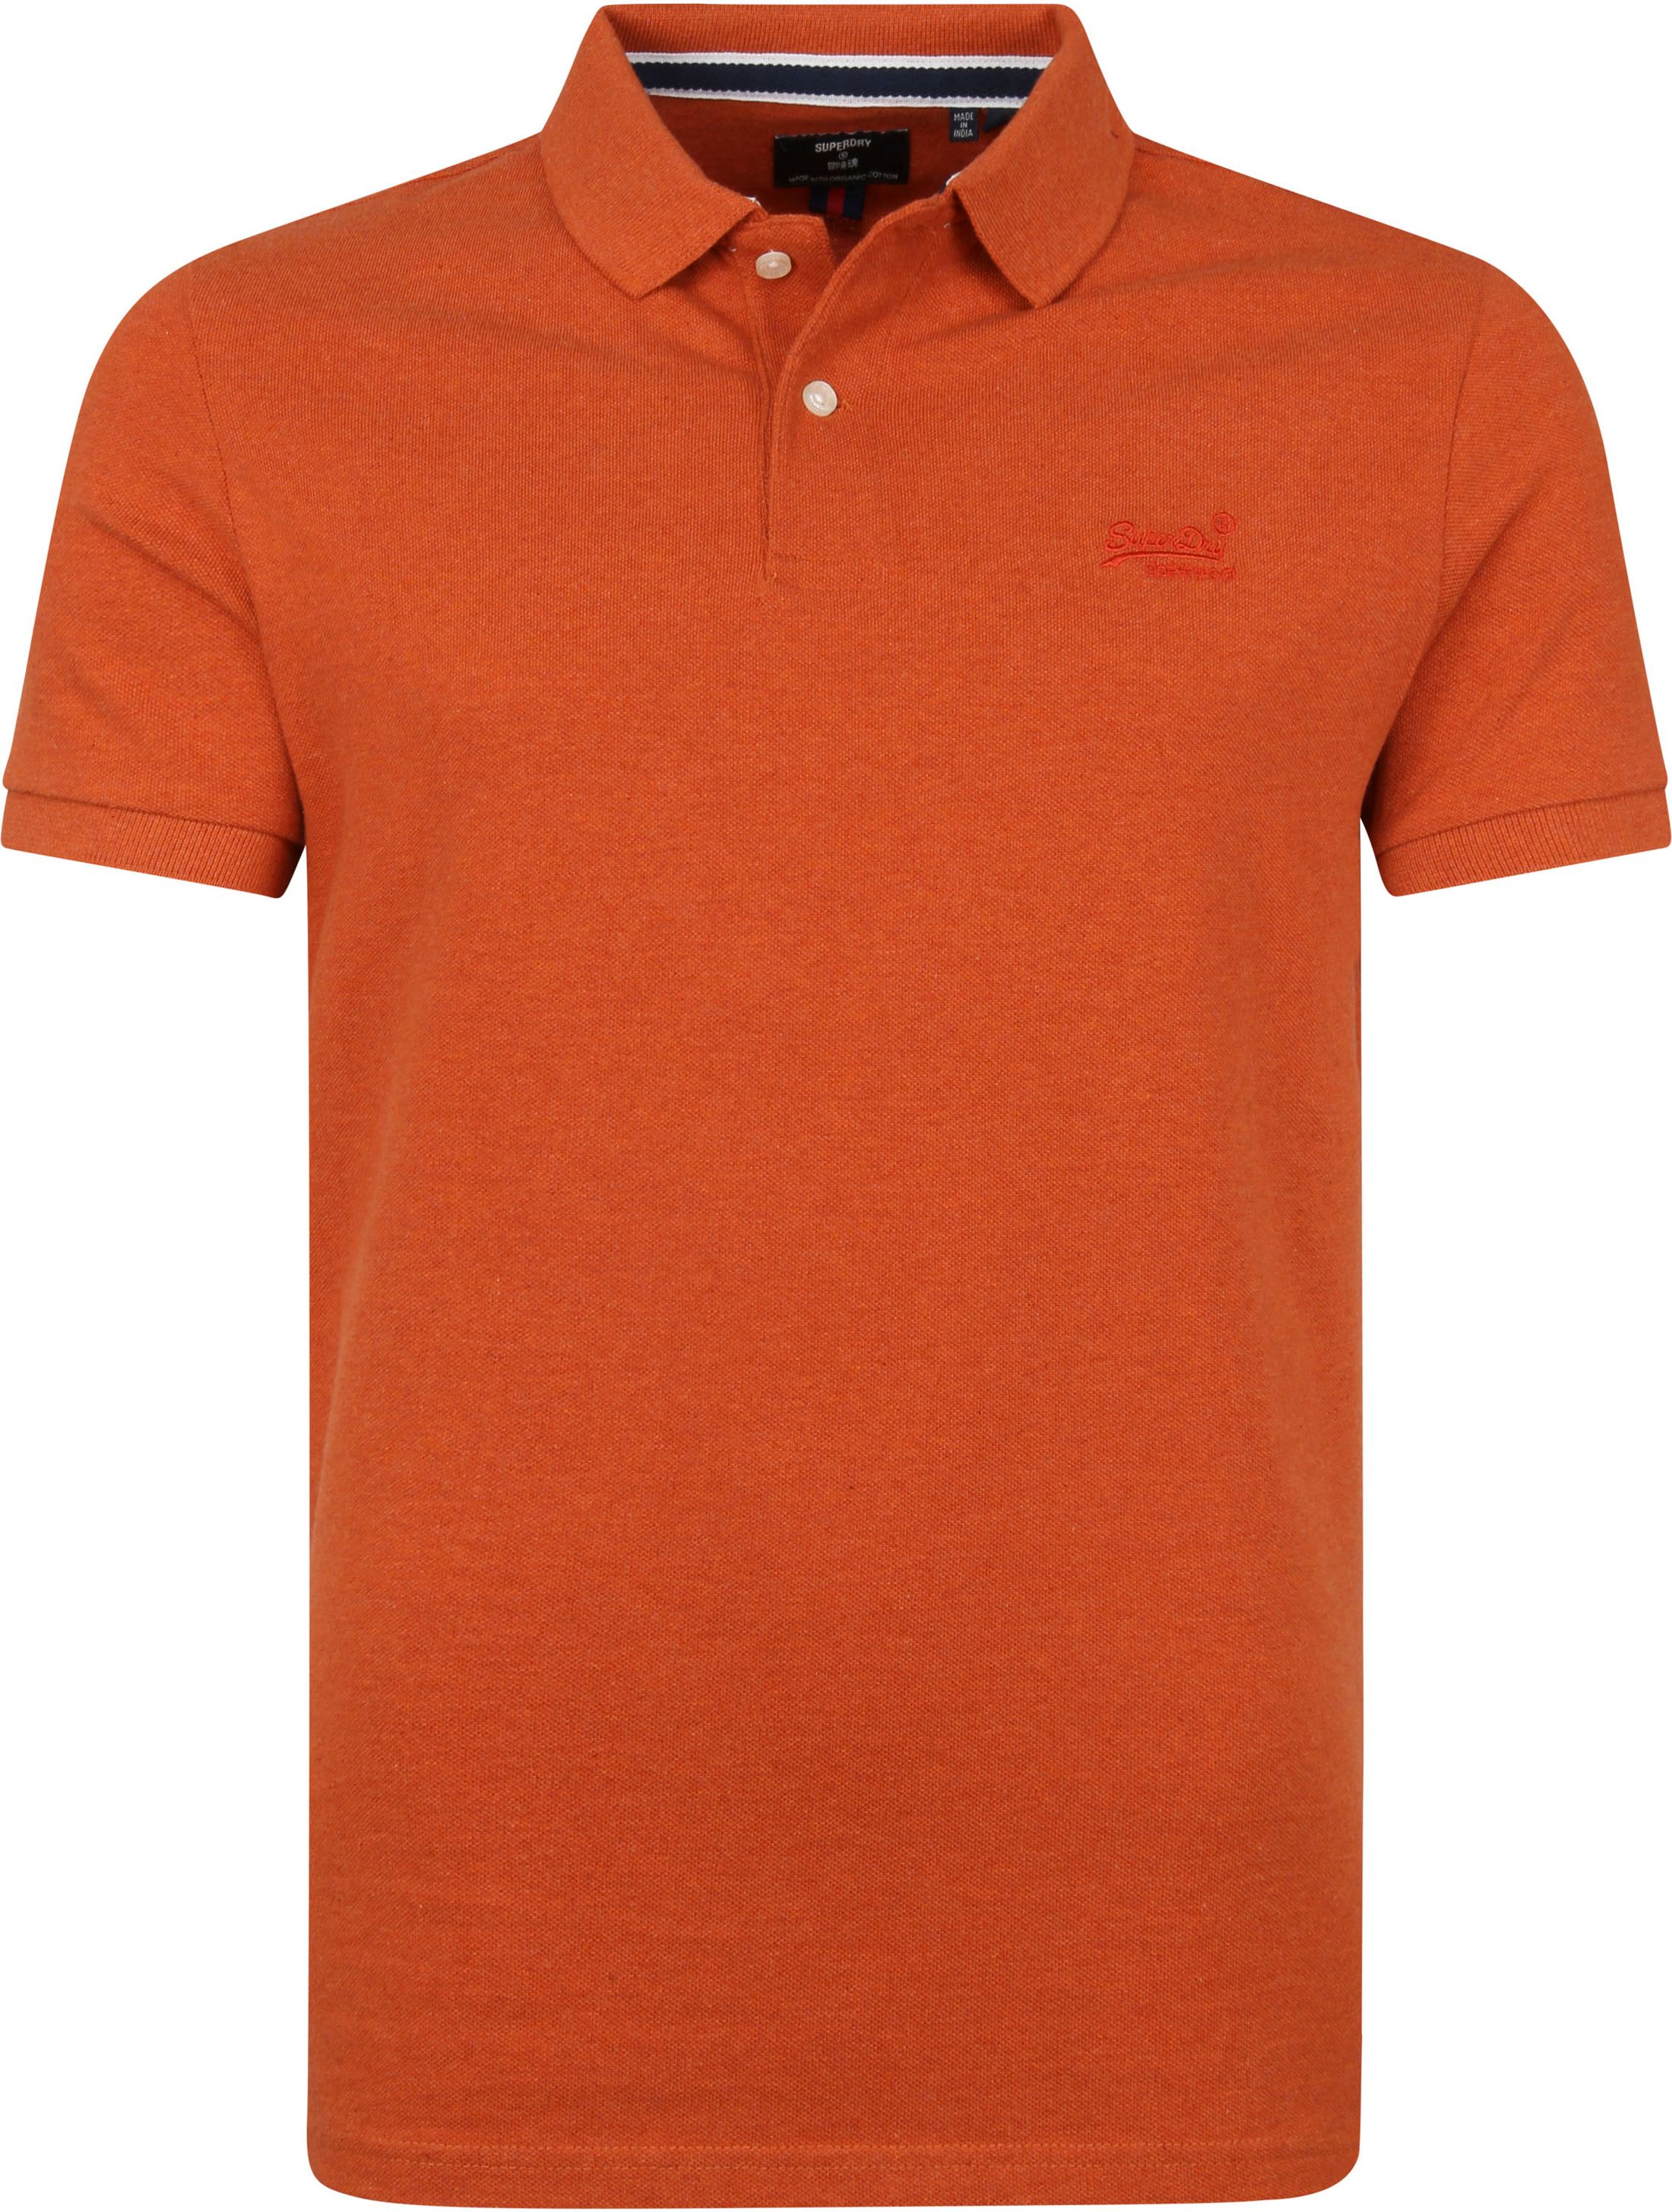 Superdry Classic Polo Shirt Orange size 3XL